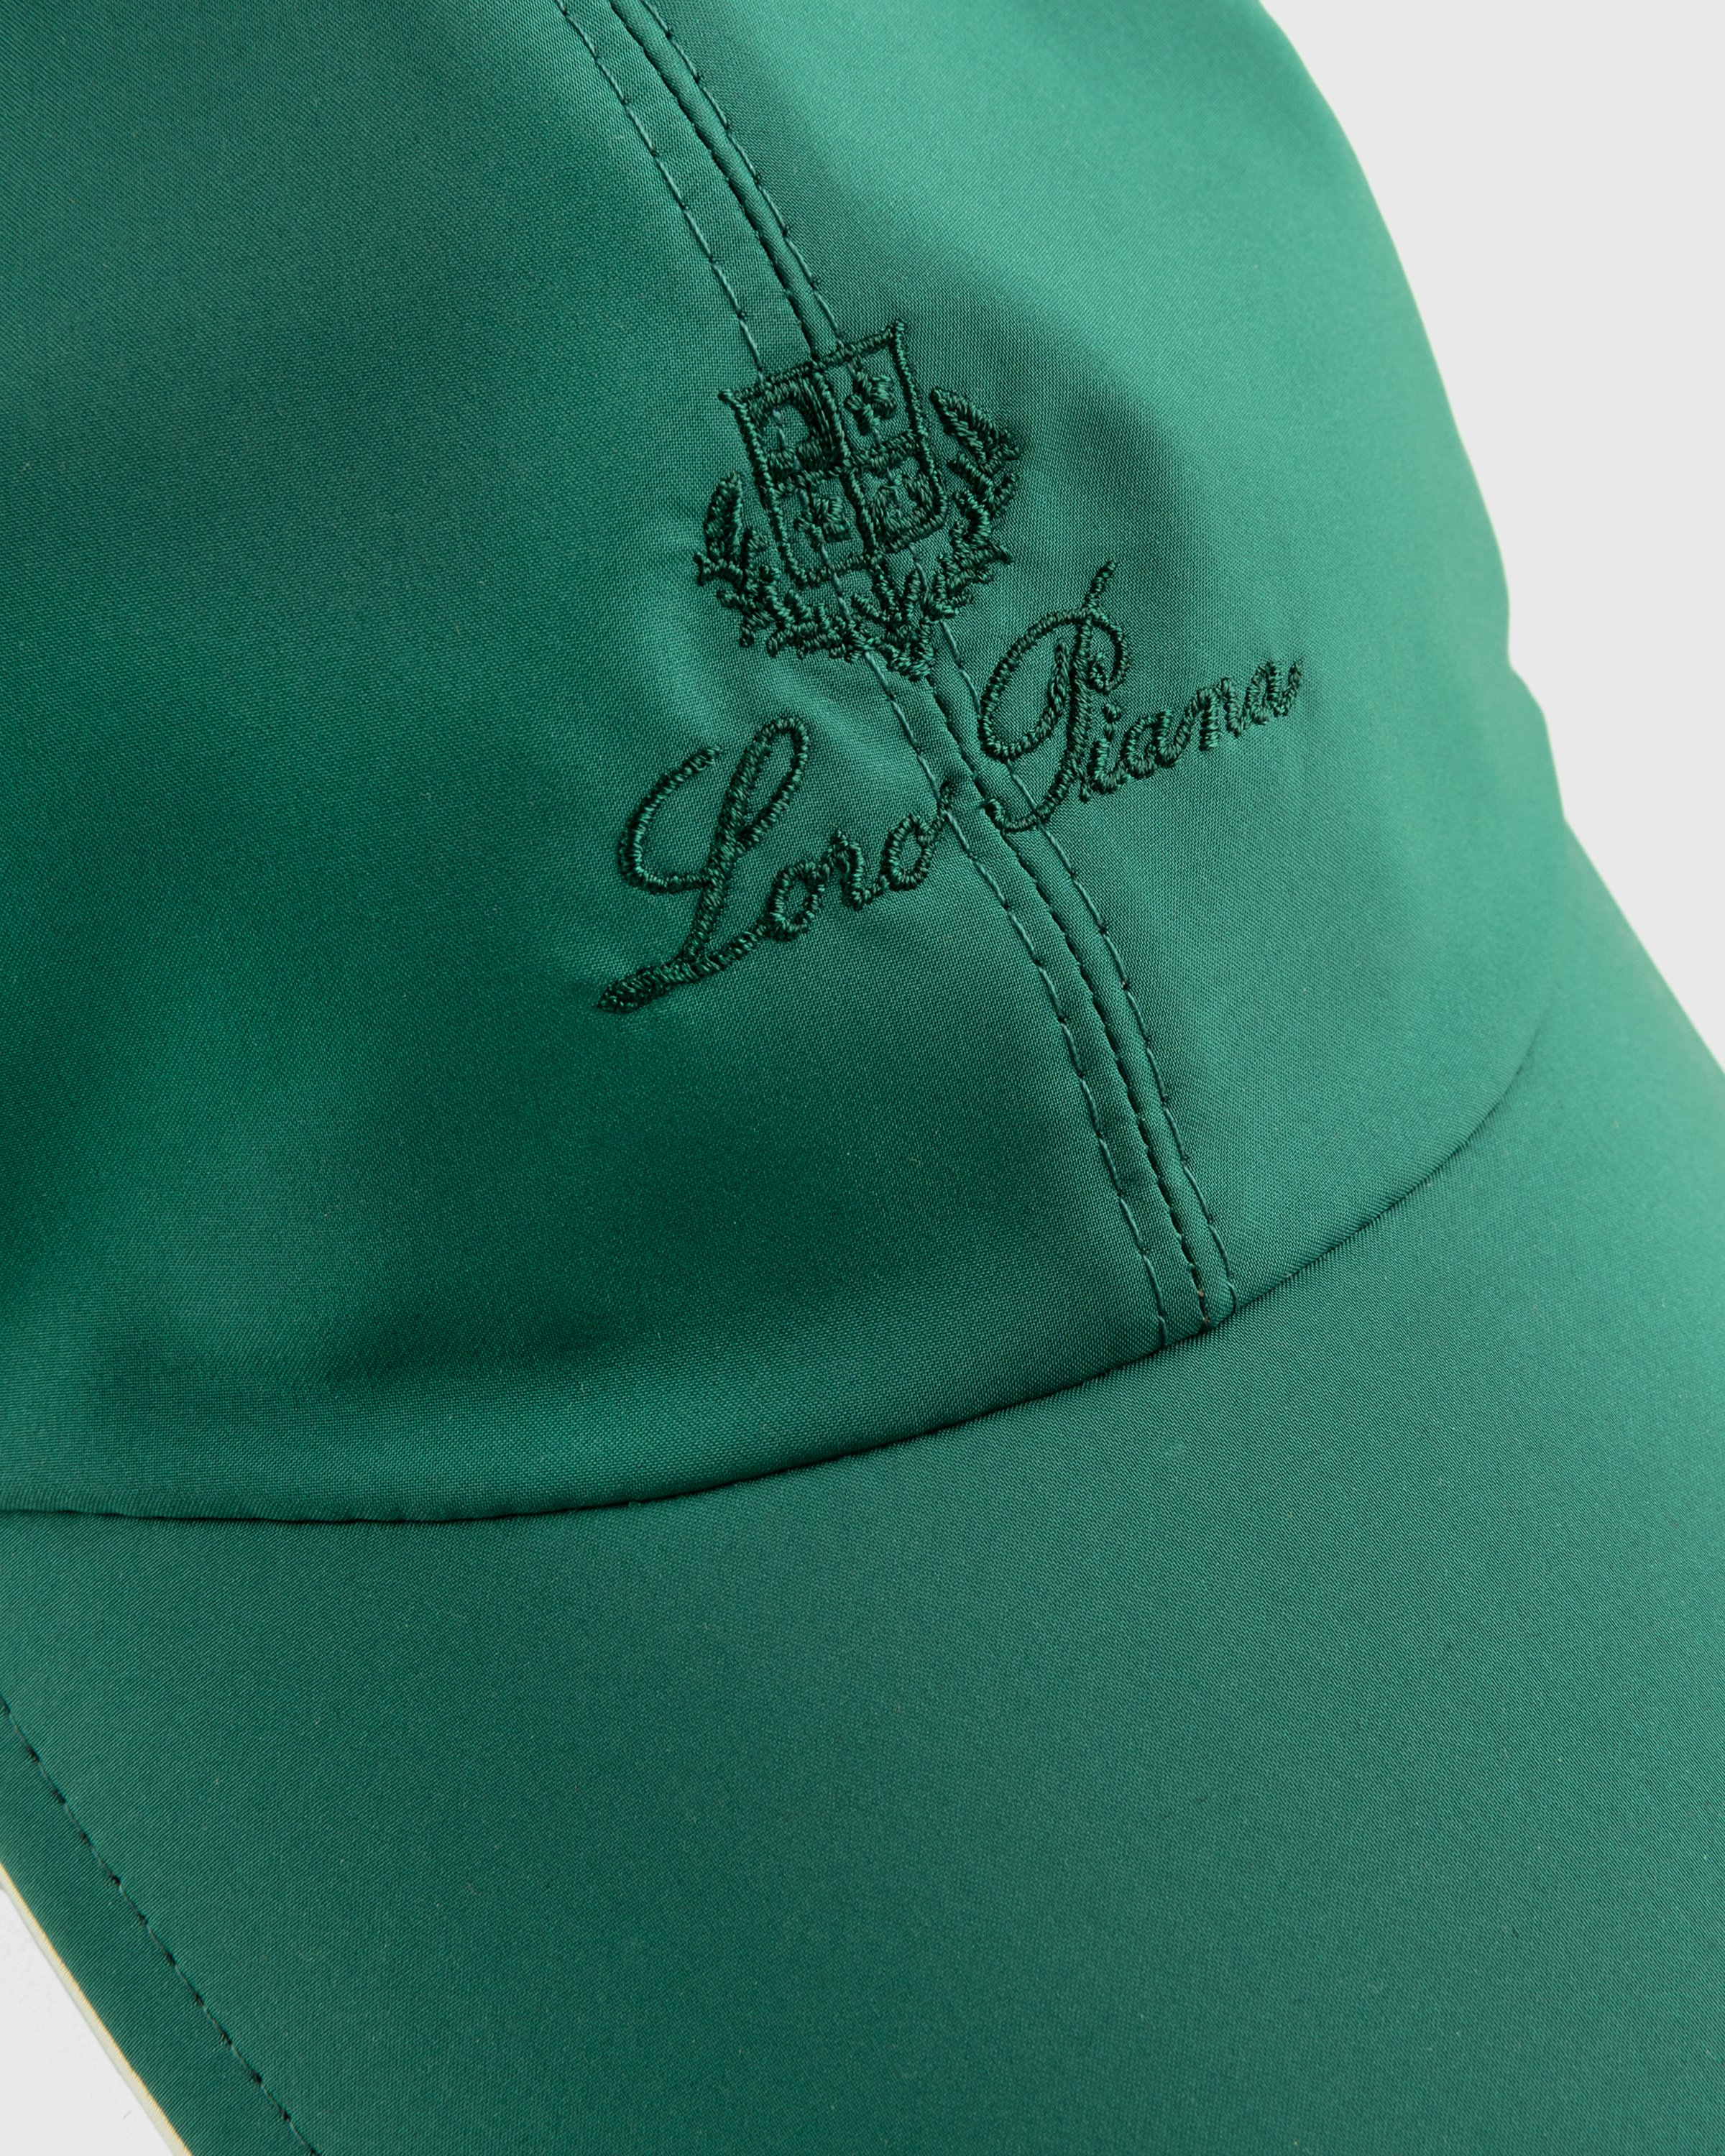 Loro Piana - Bicolor Baseball Cap Green Mint / Ivory - Accessories - Green - Image 4